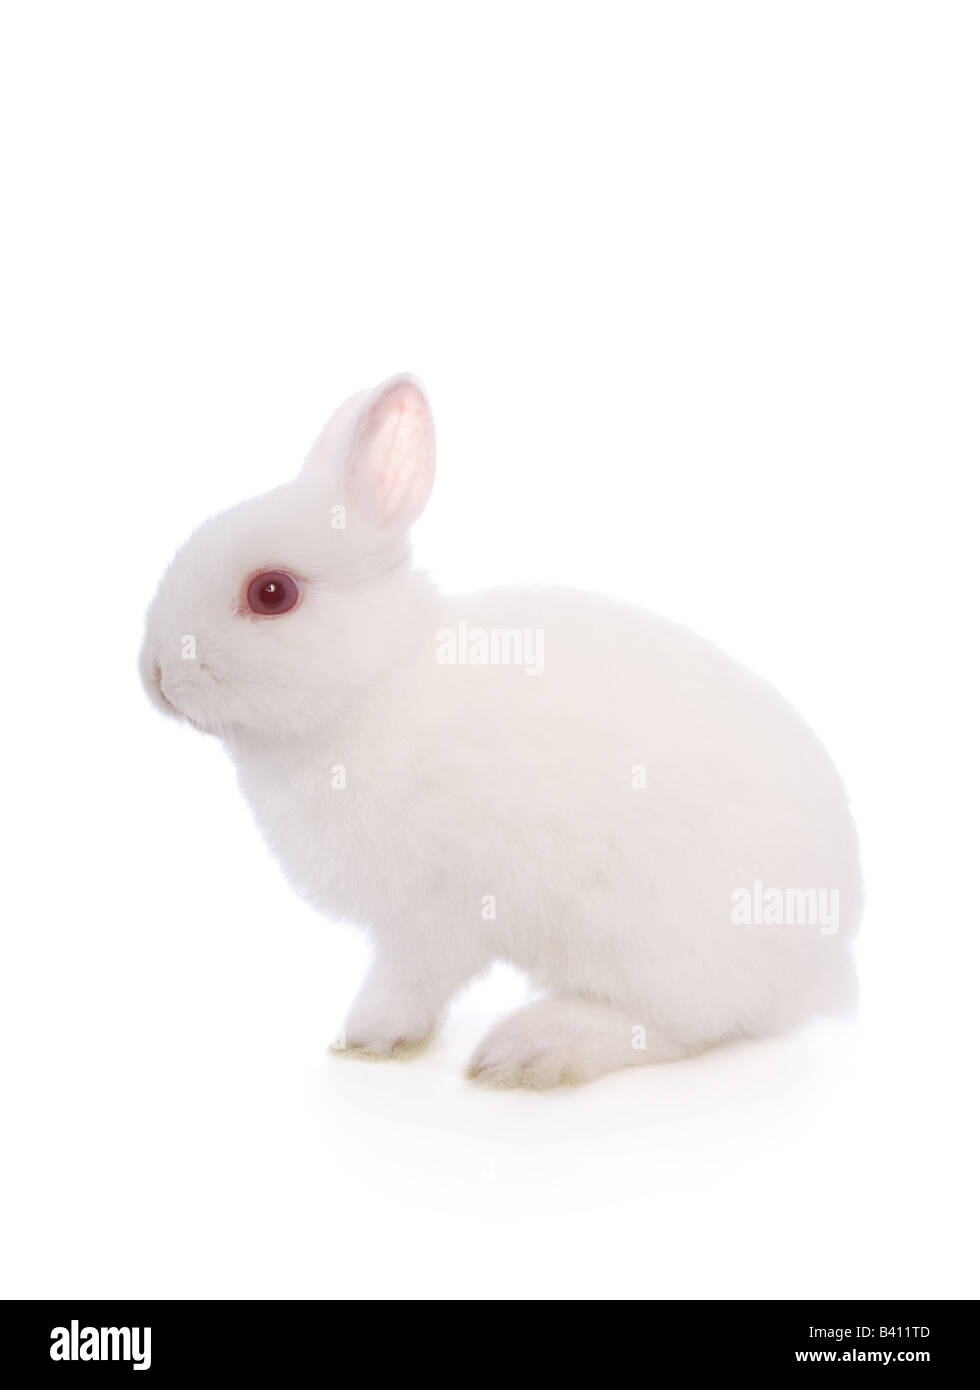 Cute white Netherland Dwarf bunny rabbit isolated Stock Photo